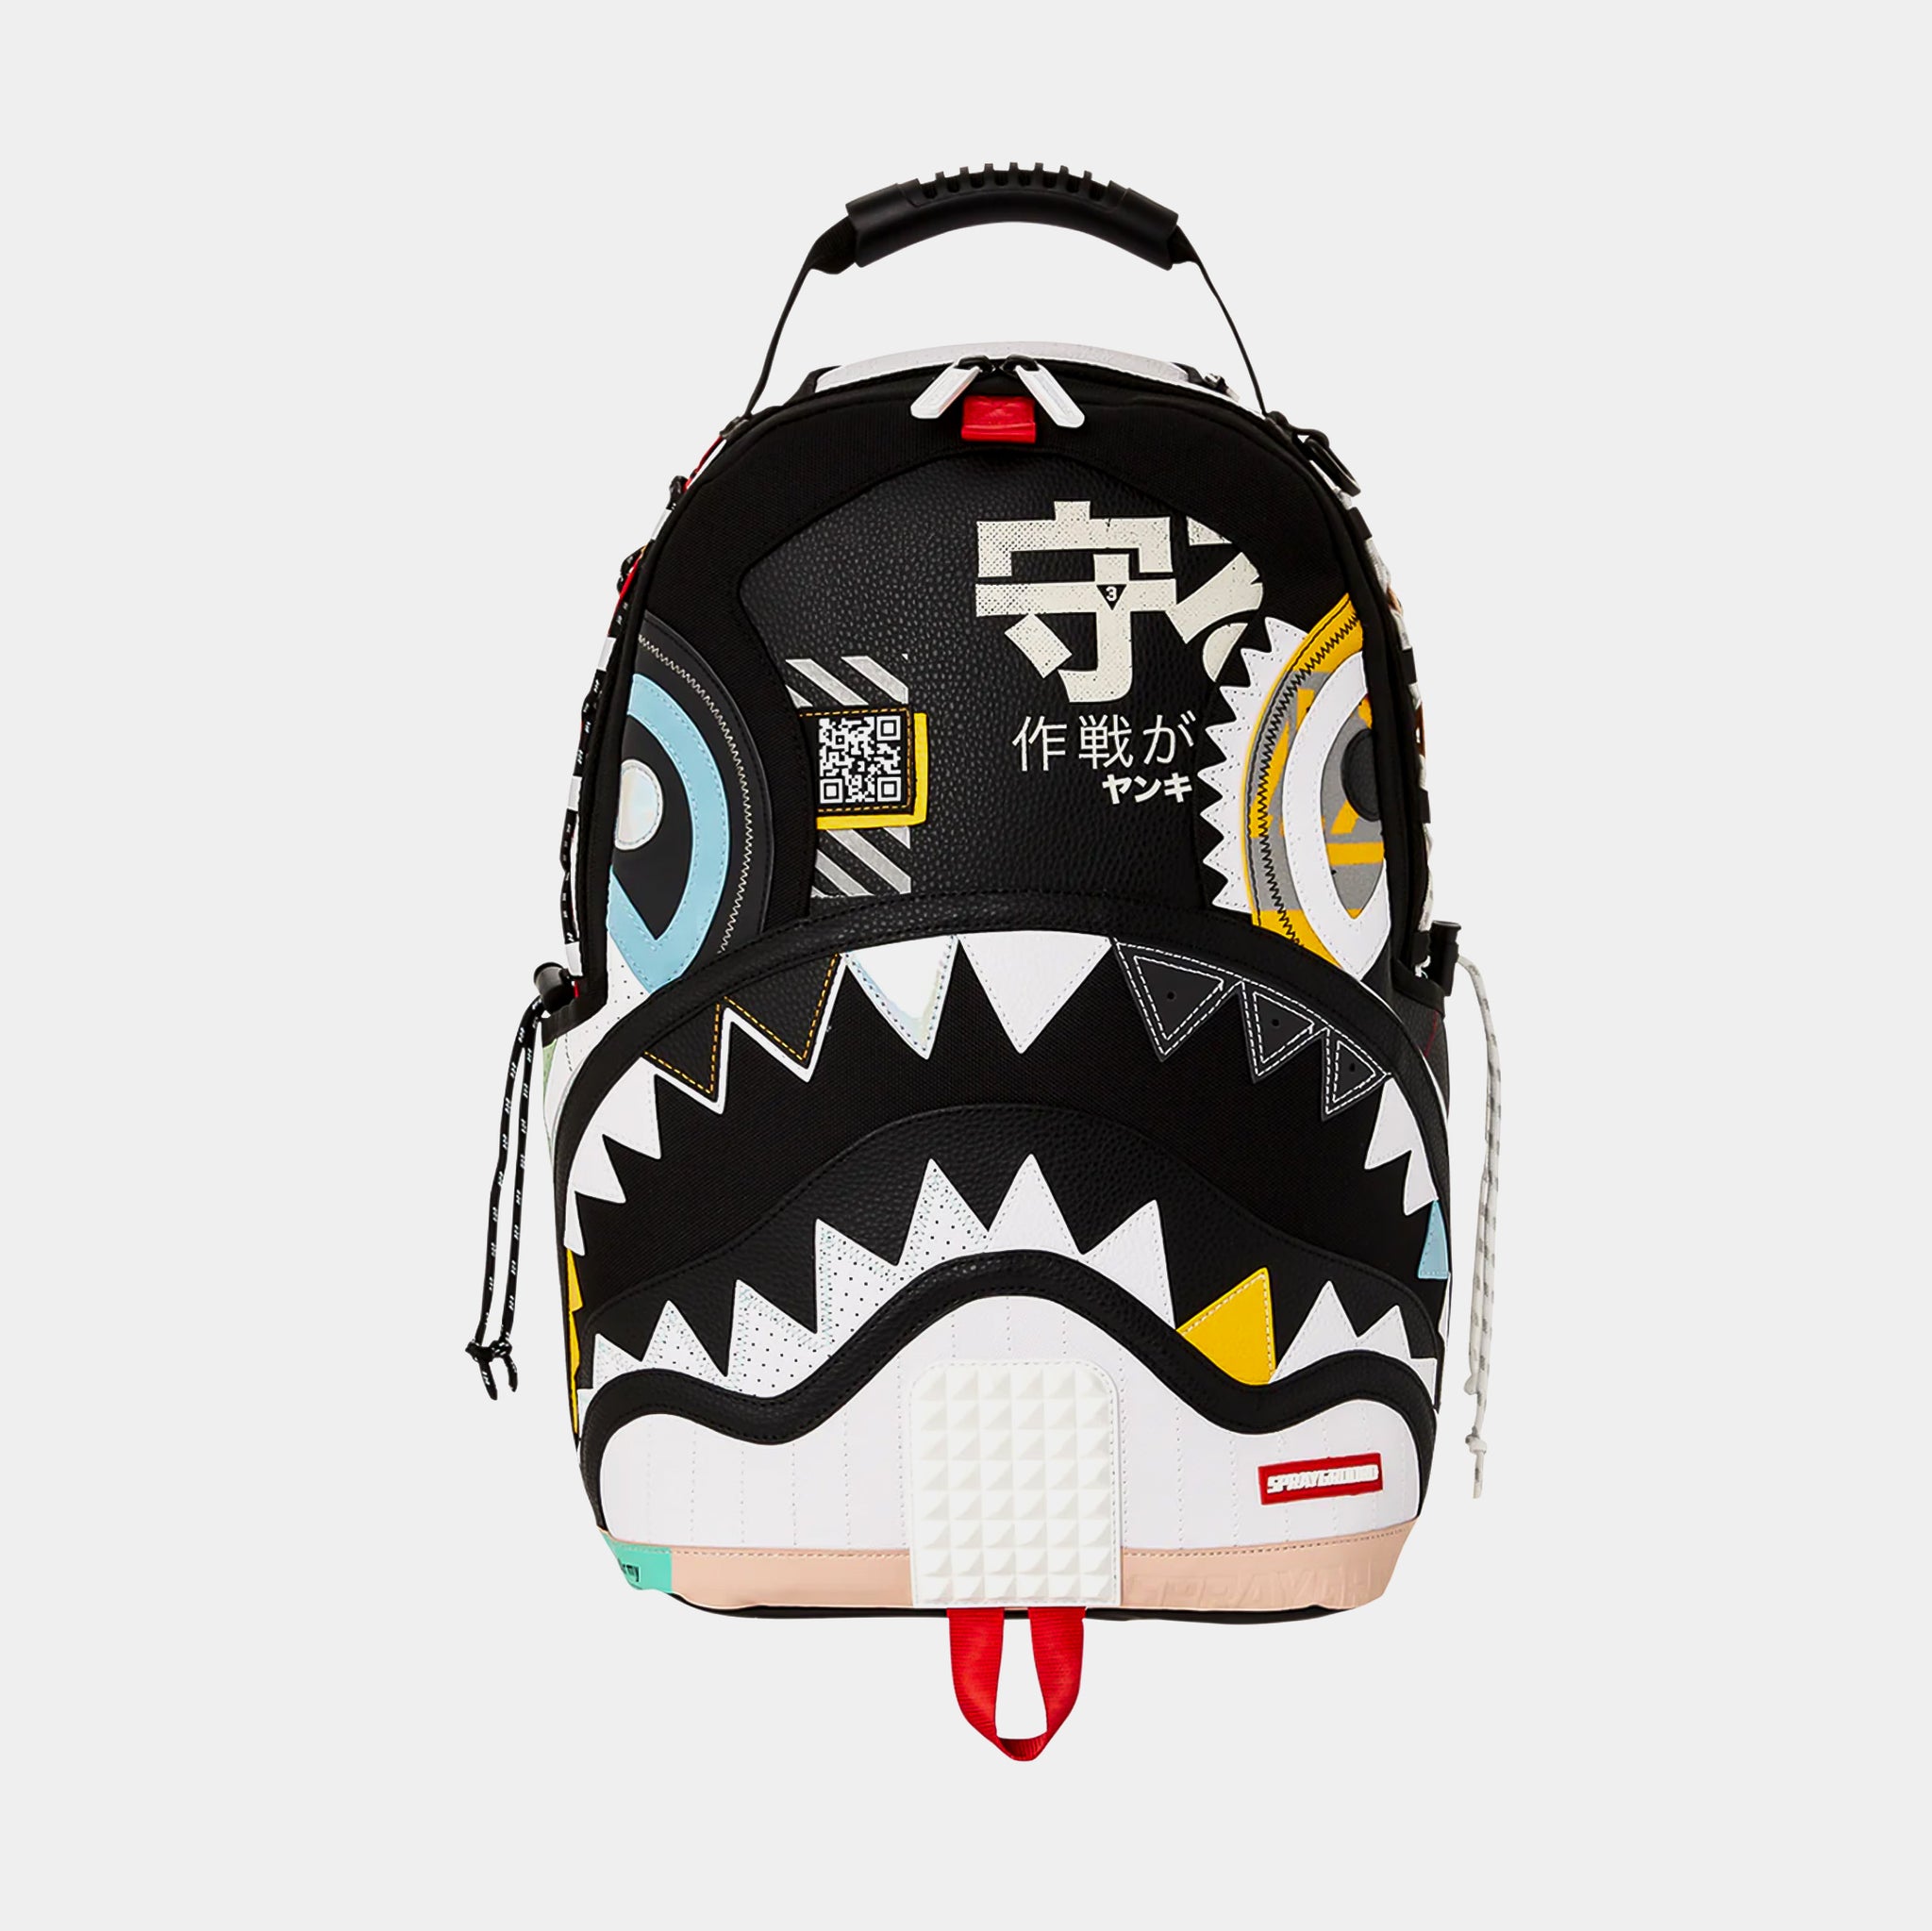 Sprayground Shark Backpacks